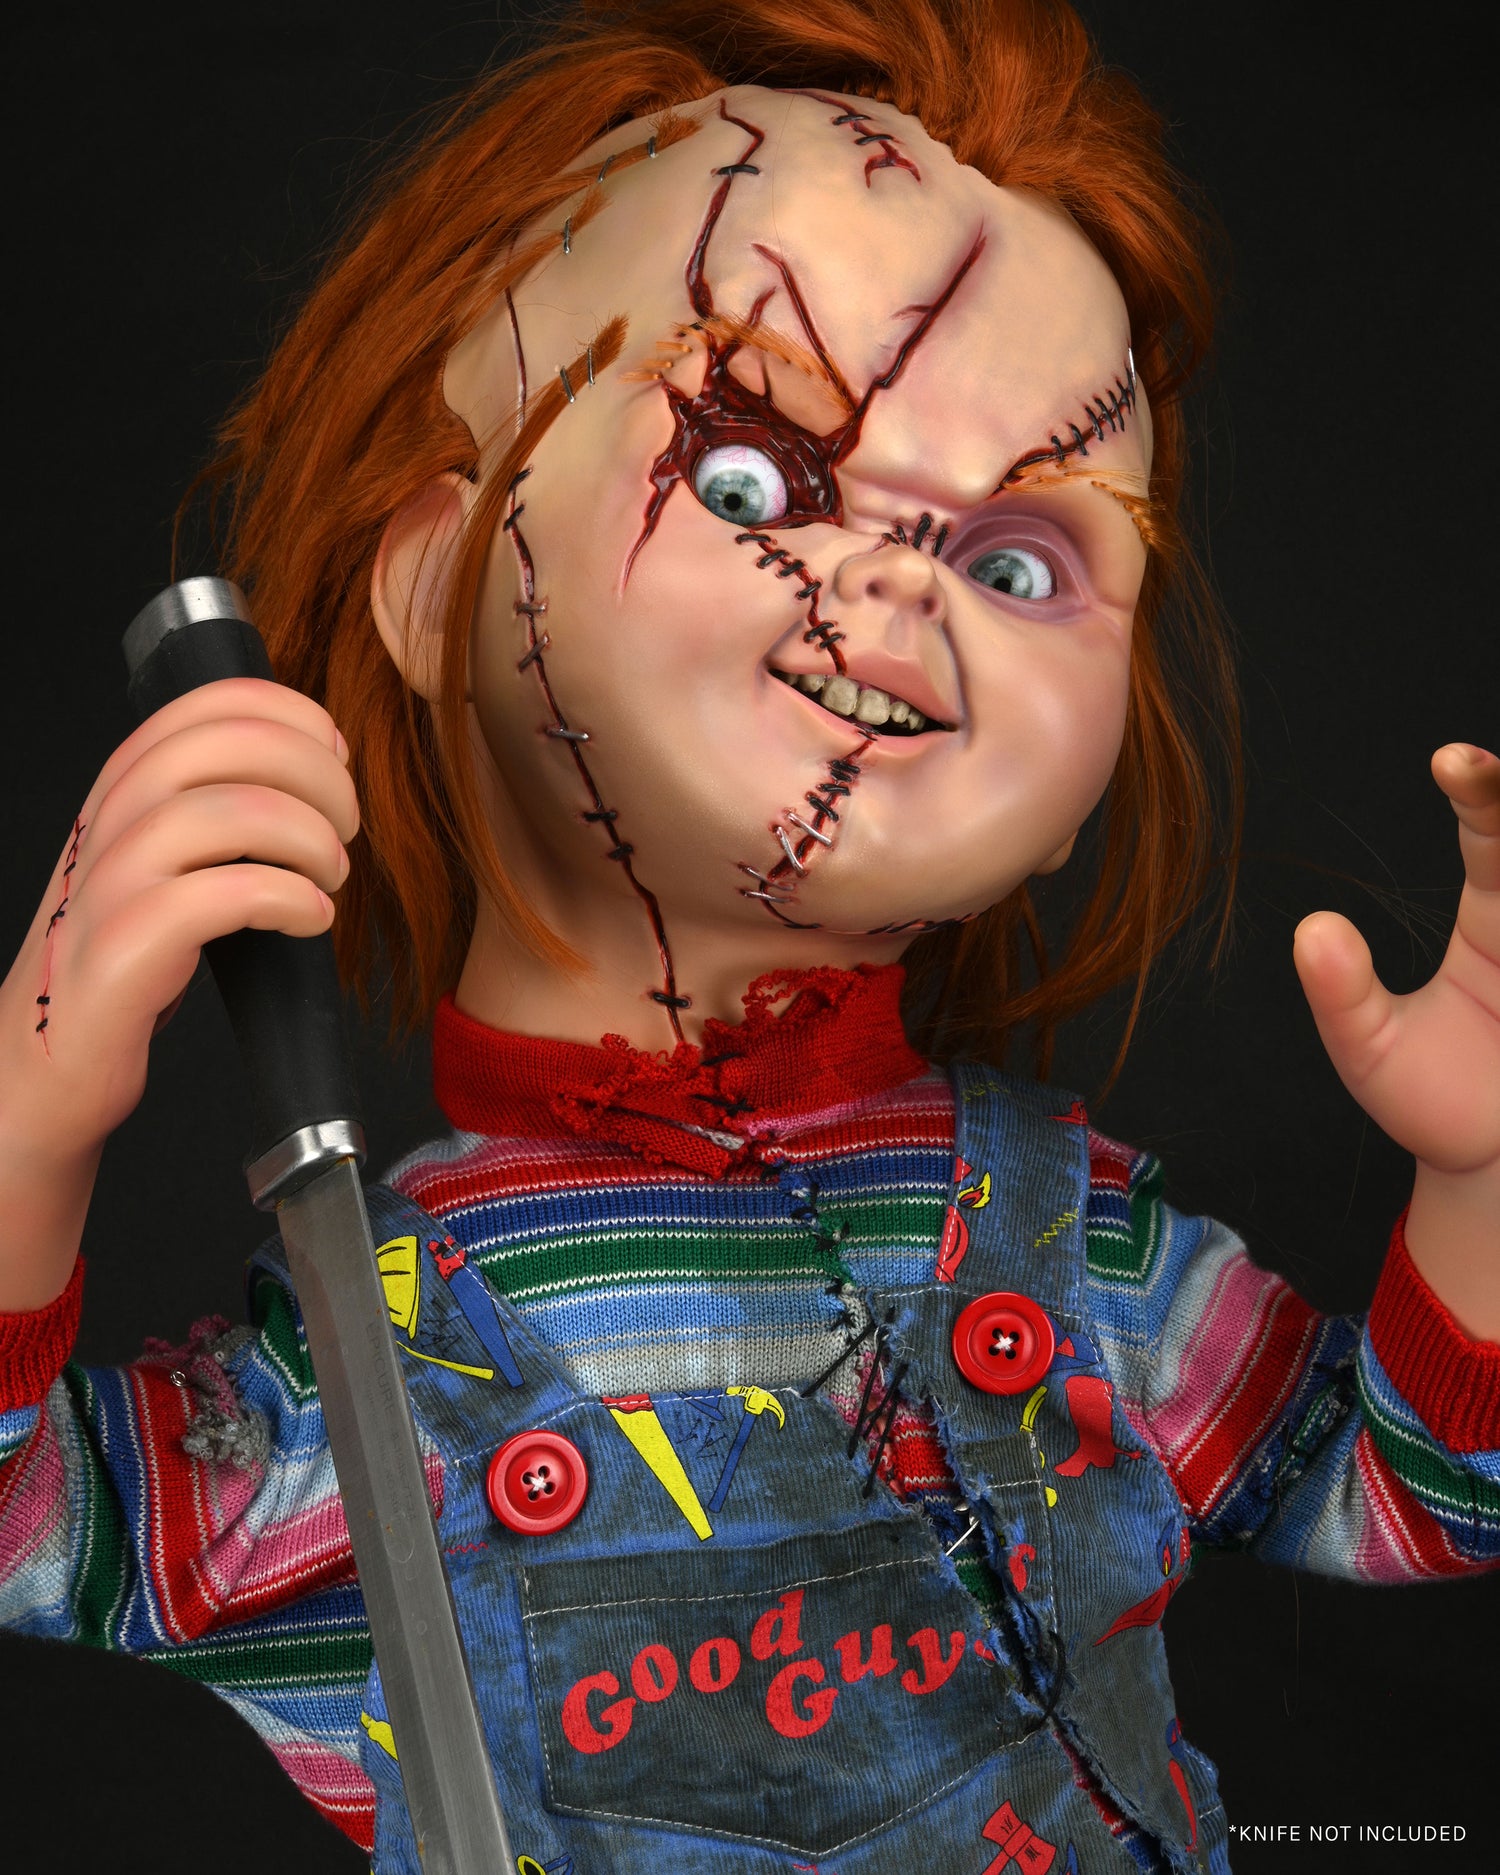 Scary Chucky holding a knife